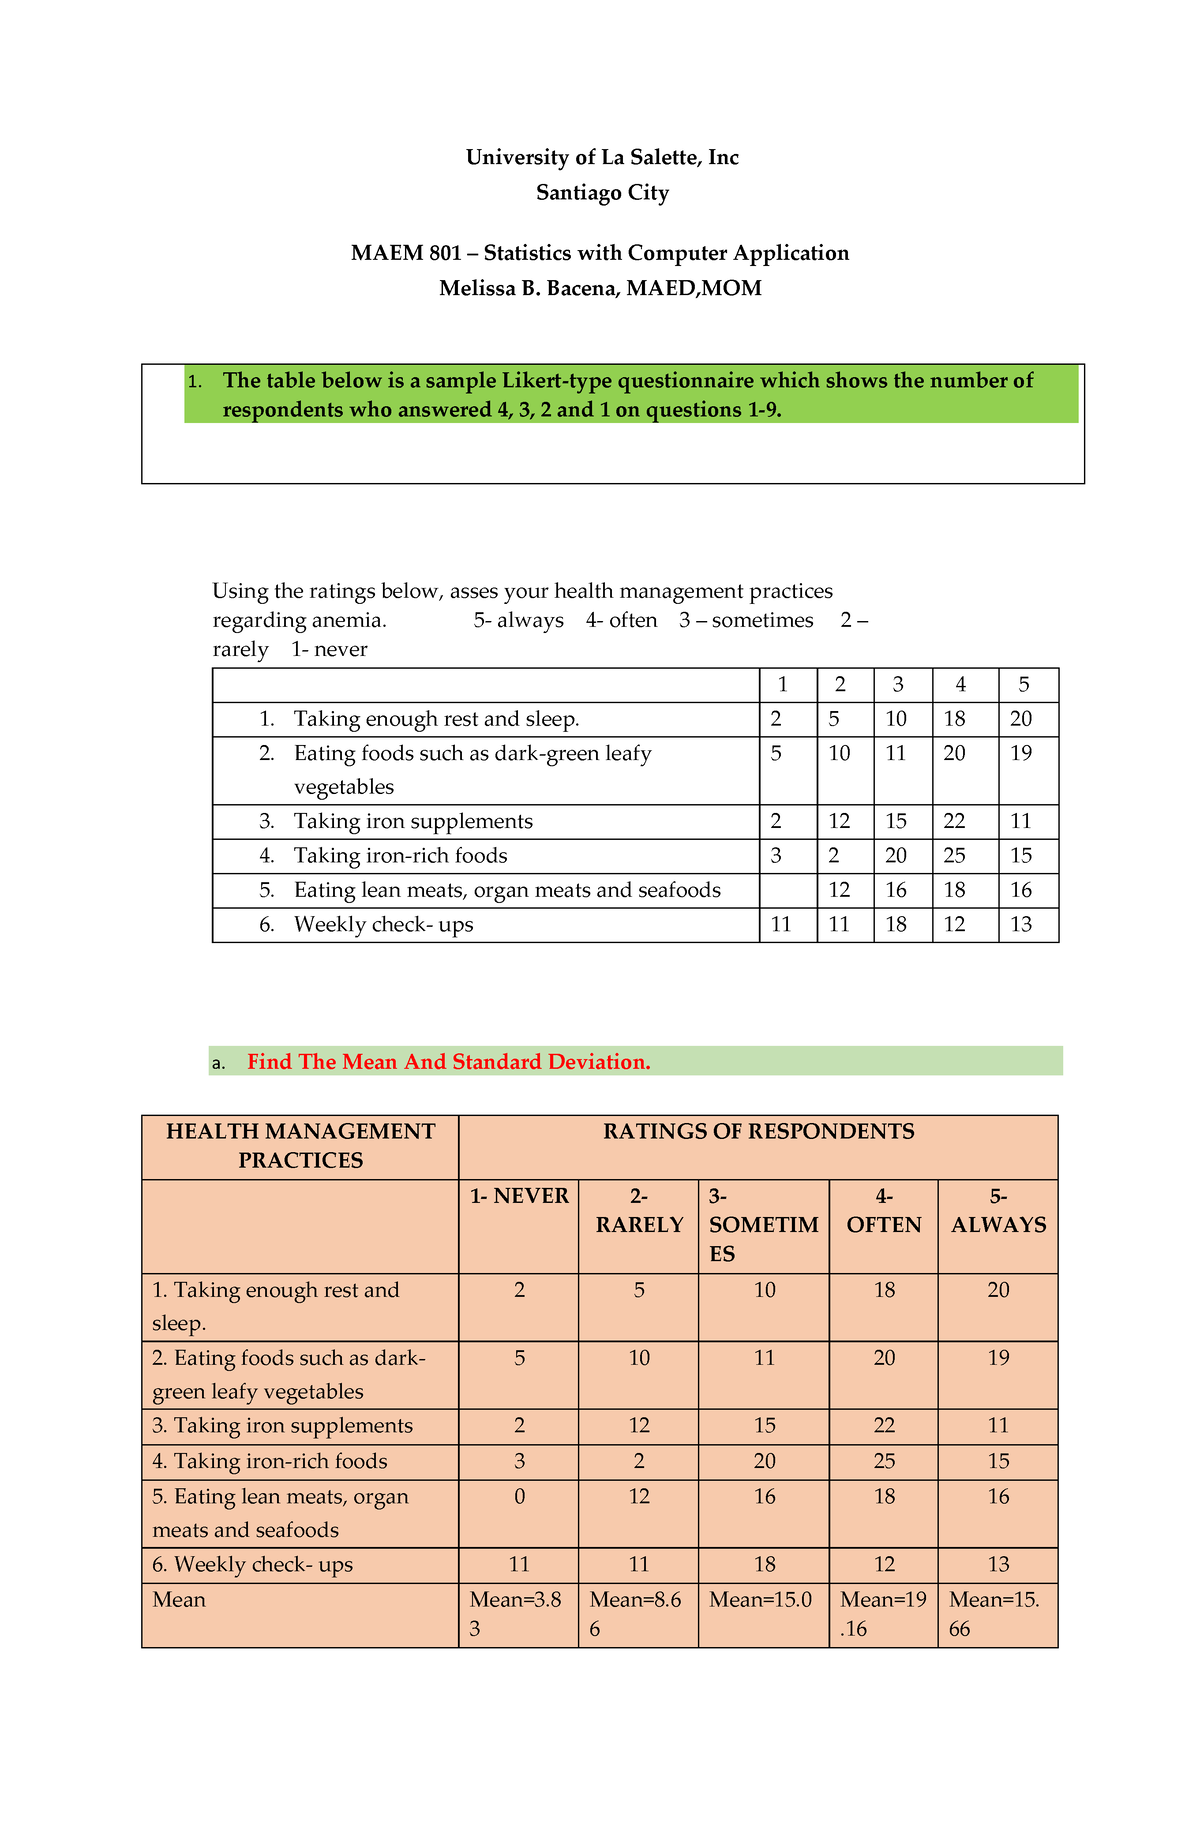 MAEM assessment task 4 descriptive statistics - University of La ...